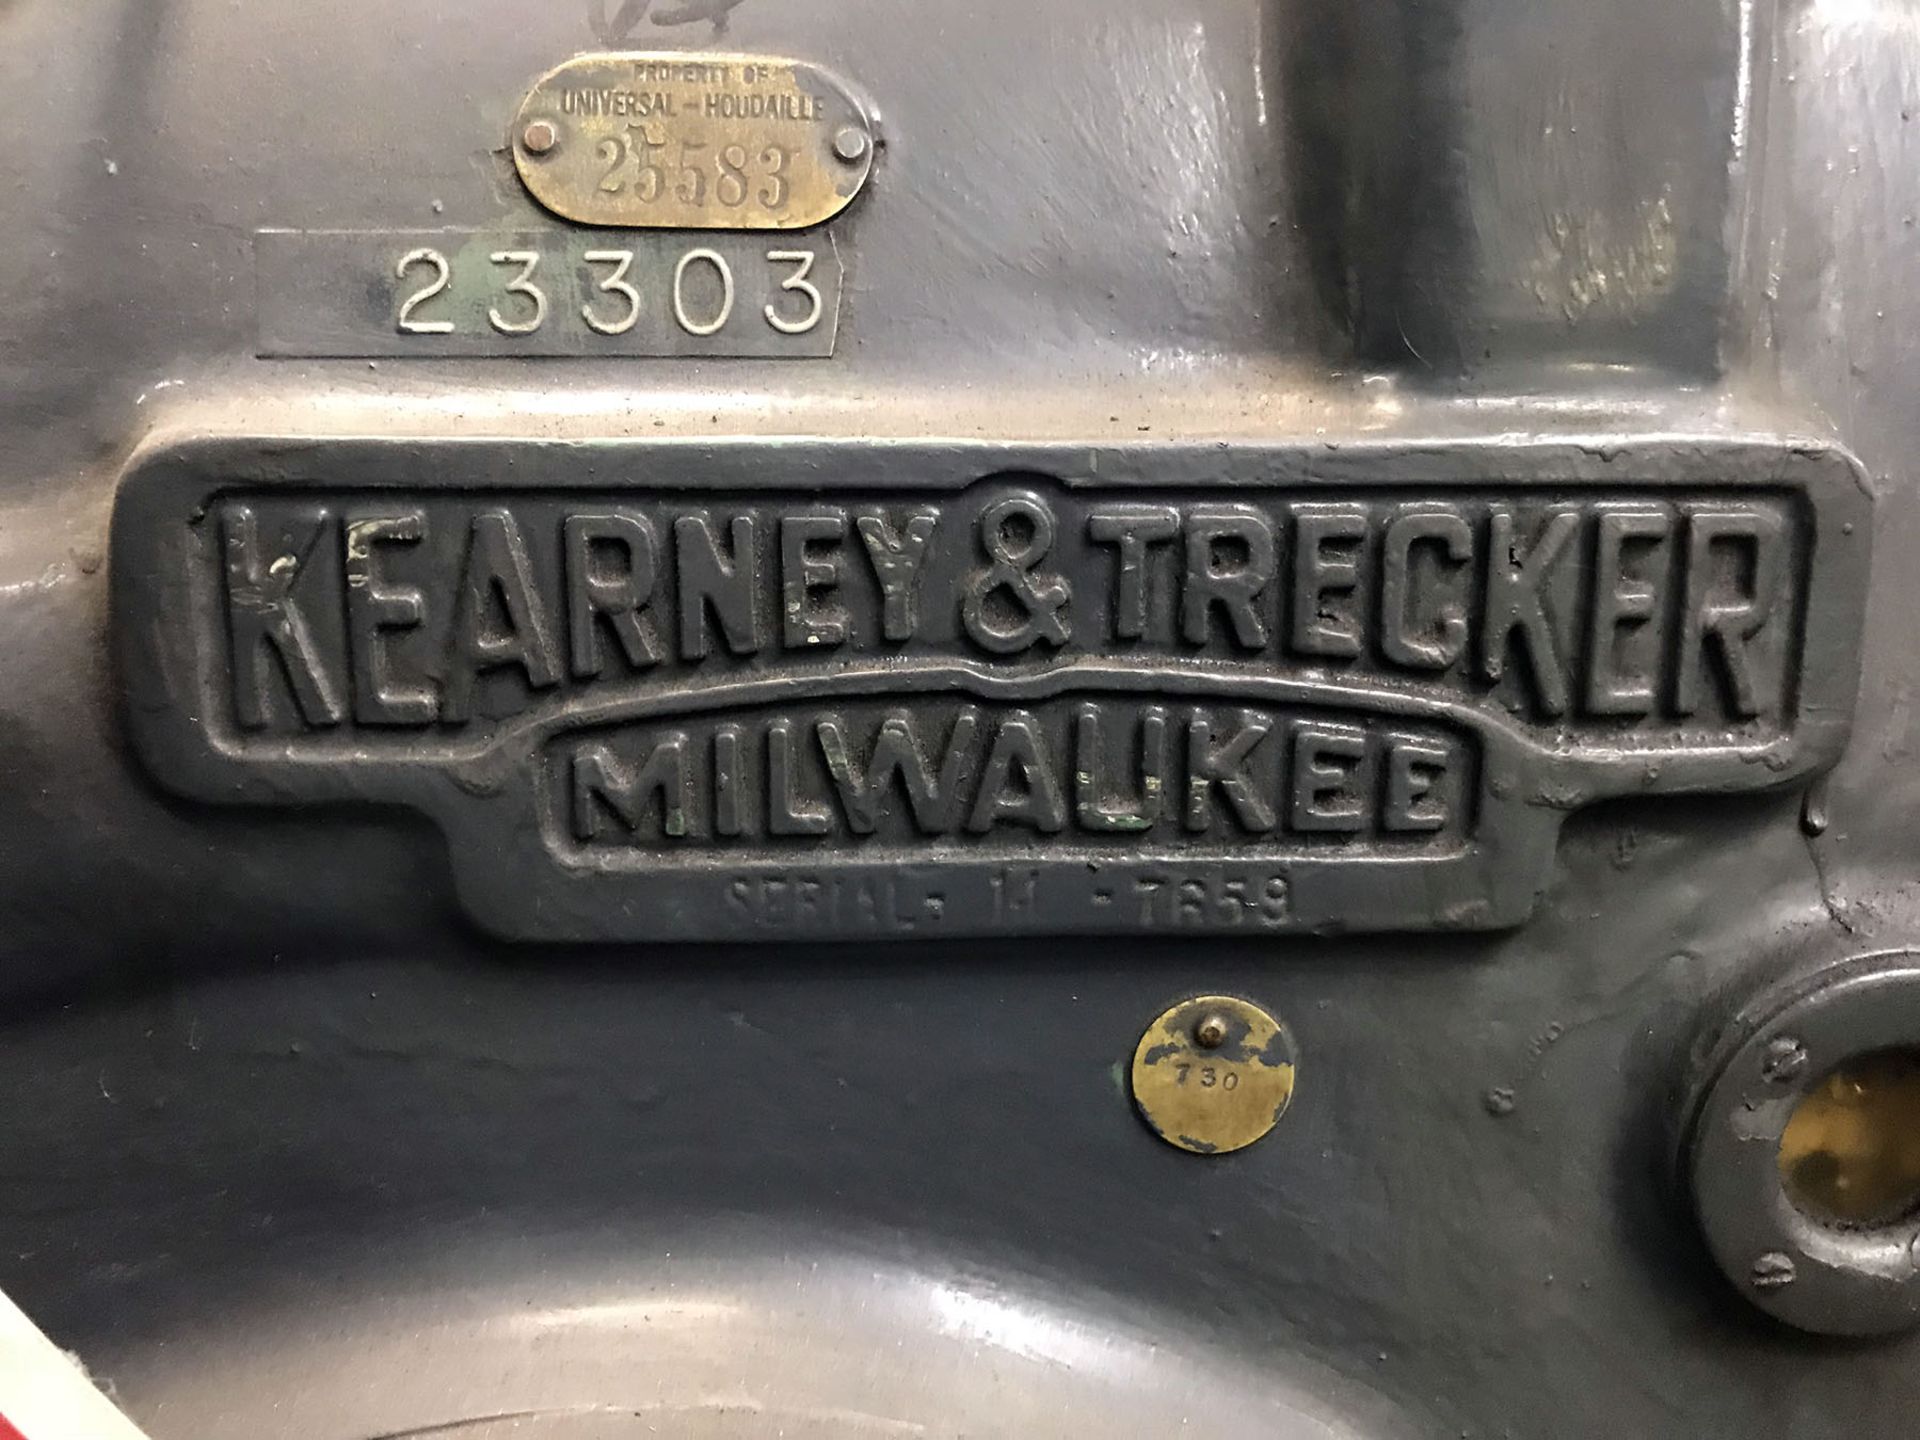 Kearney & Trecker Milwaukee Manual Mill - Image 6 of 6